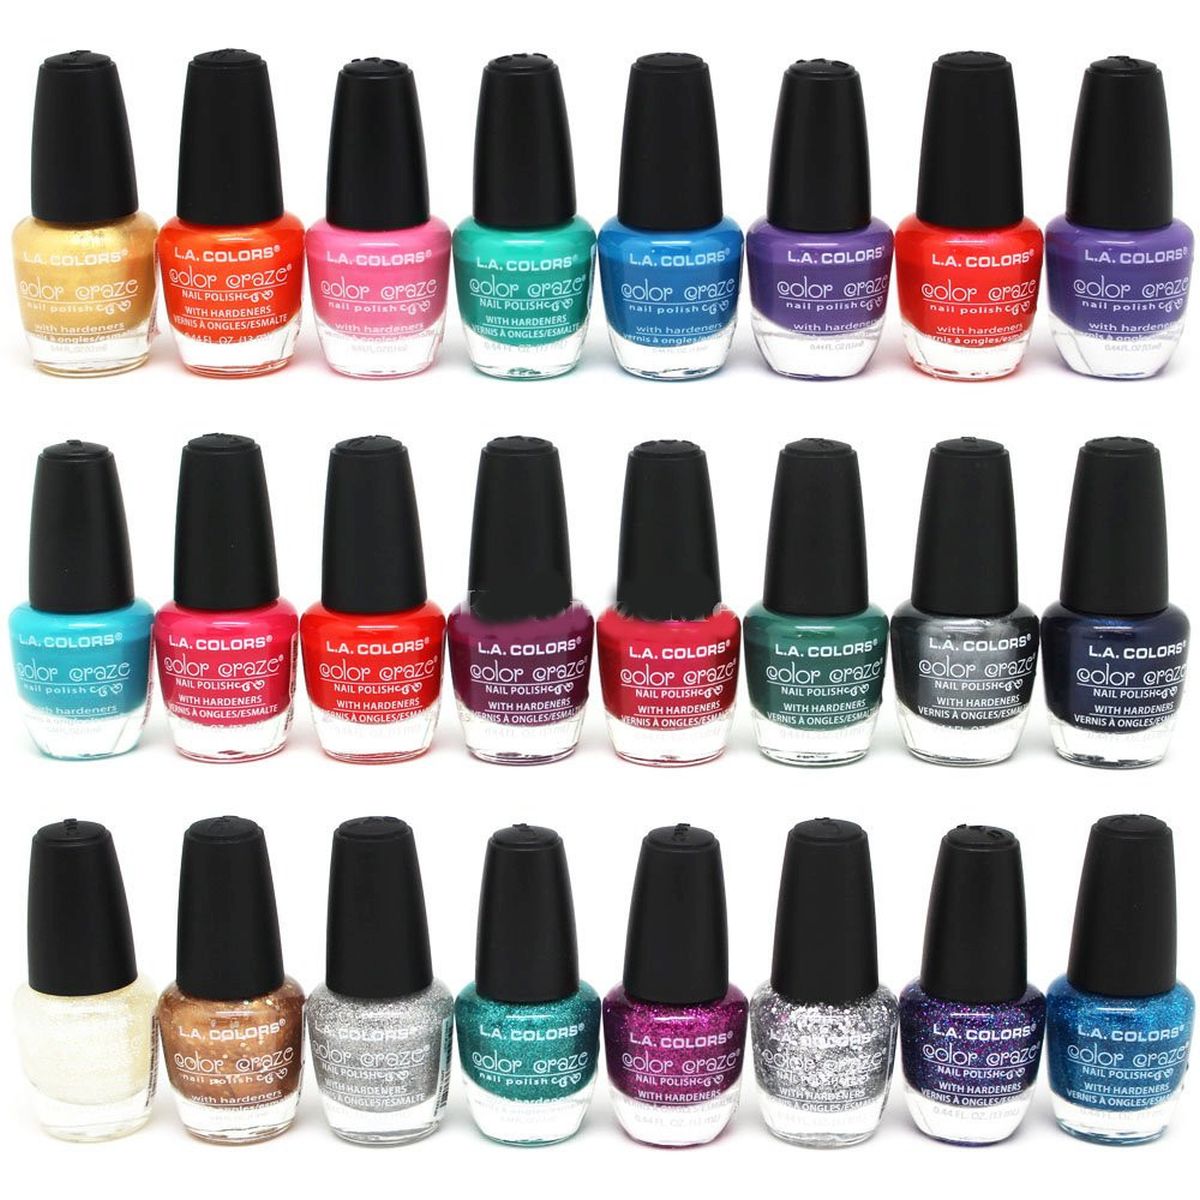 L.A. Colors Professional Series Nail Treatments, 0.44 oz. Bottles